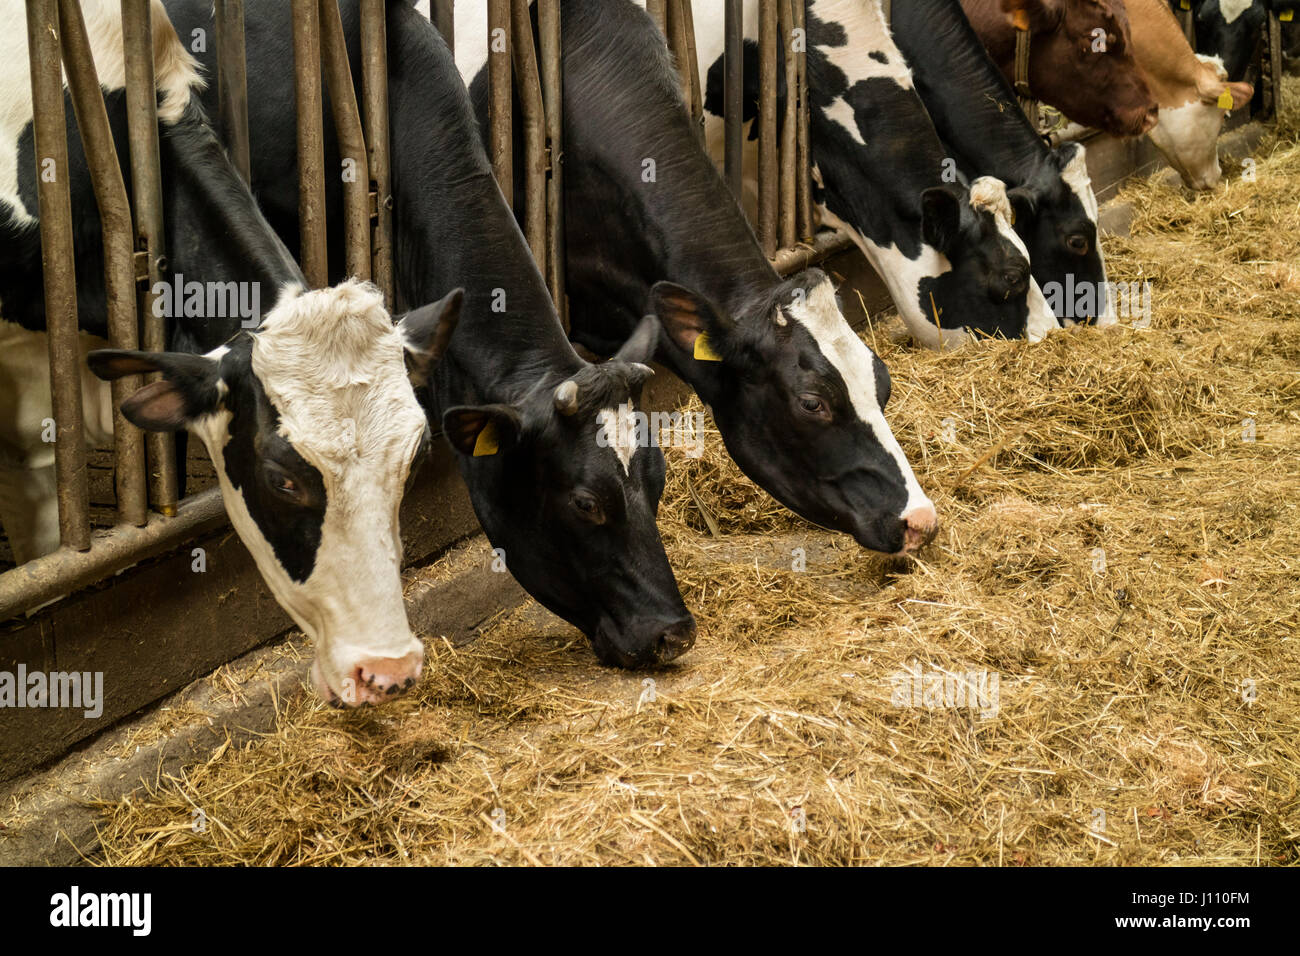 https://c8.alamy.com/comp/J110FM/cows-eating-hay-in-the-barn-at-a-dairy-farm-J110FM.jpg